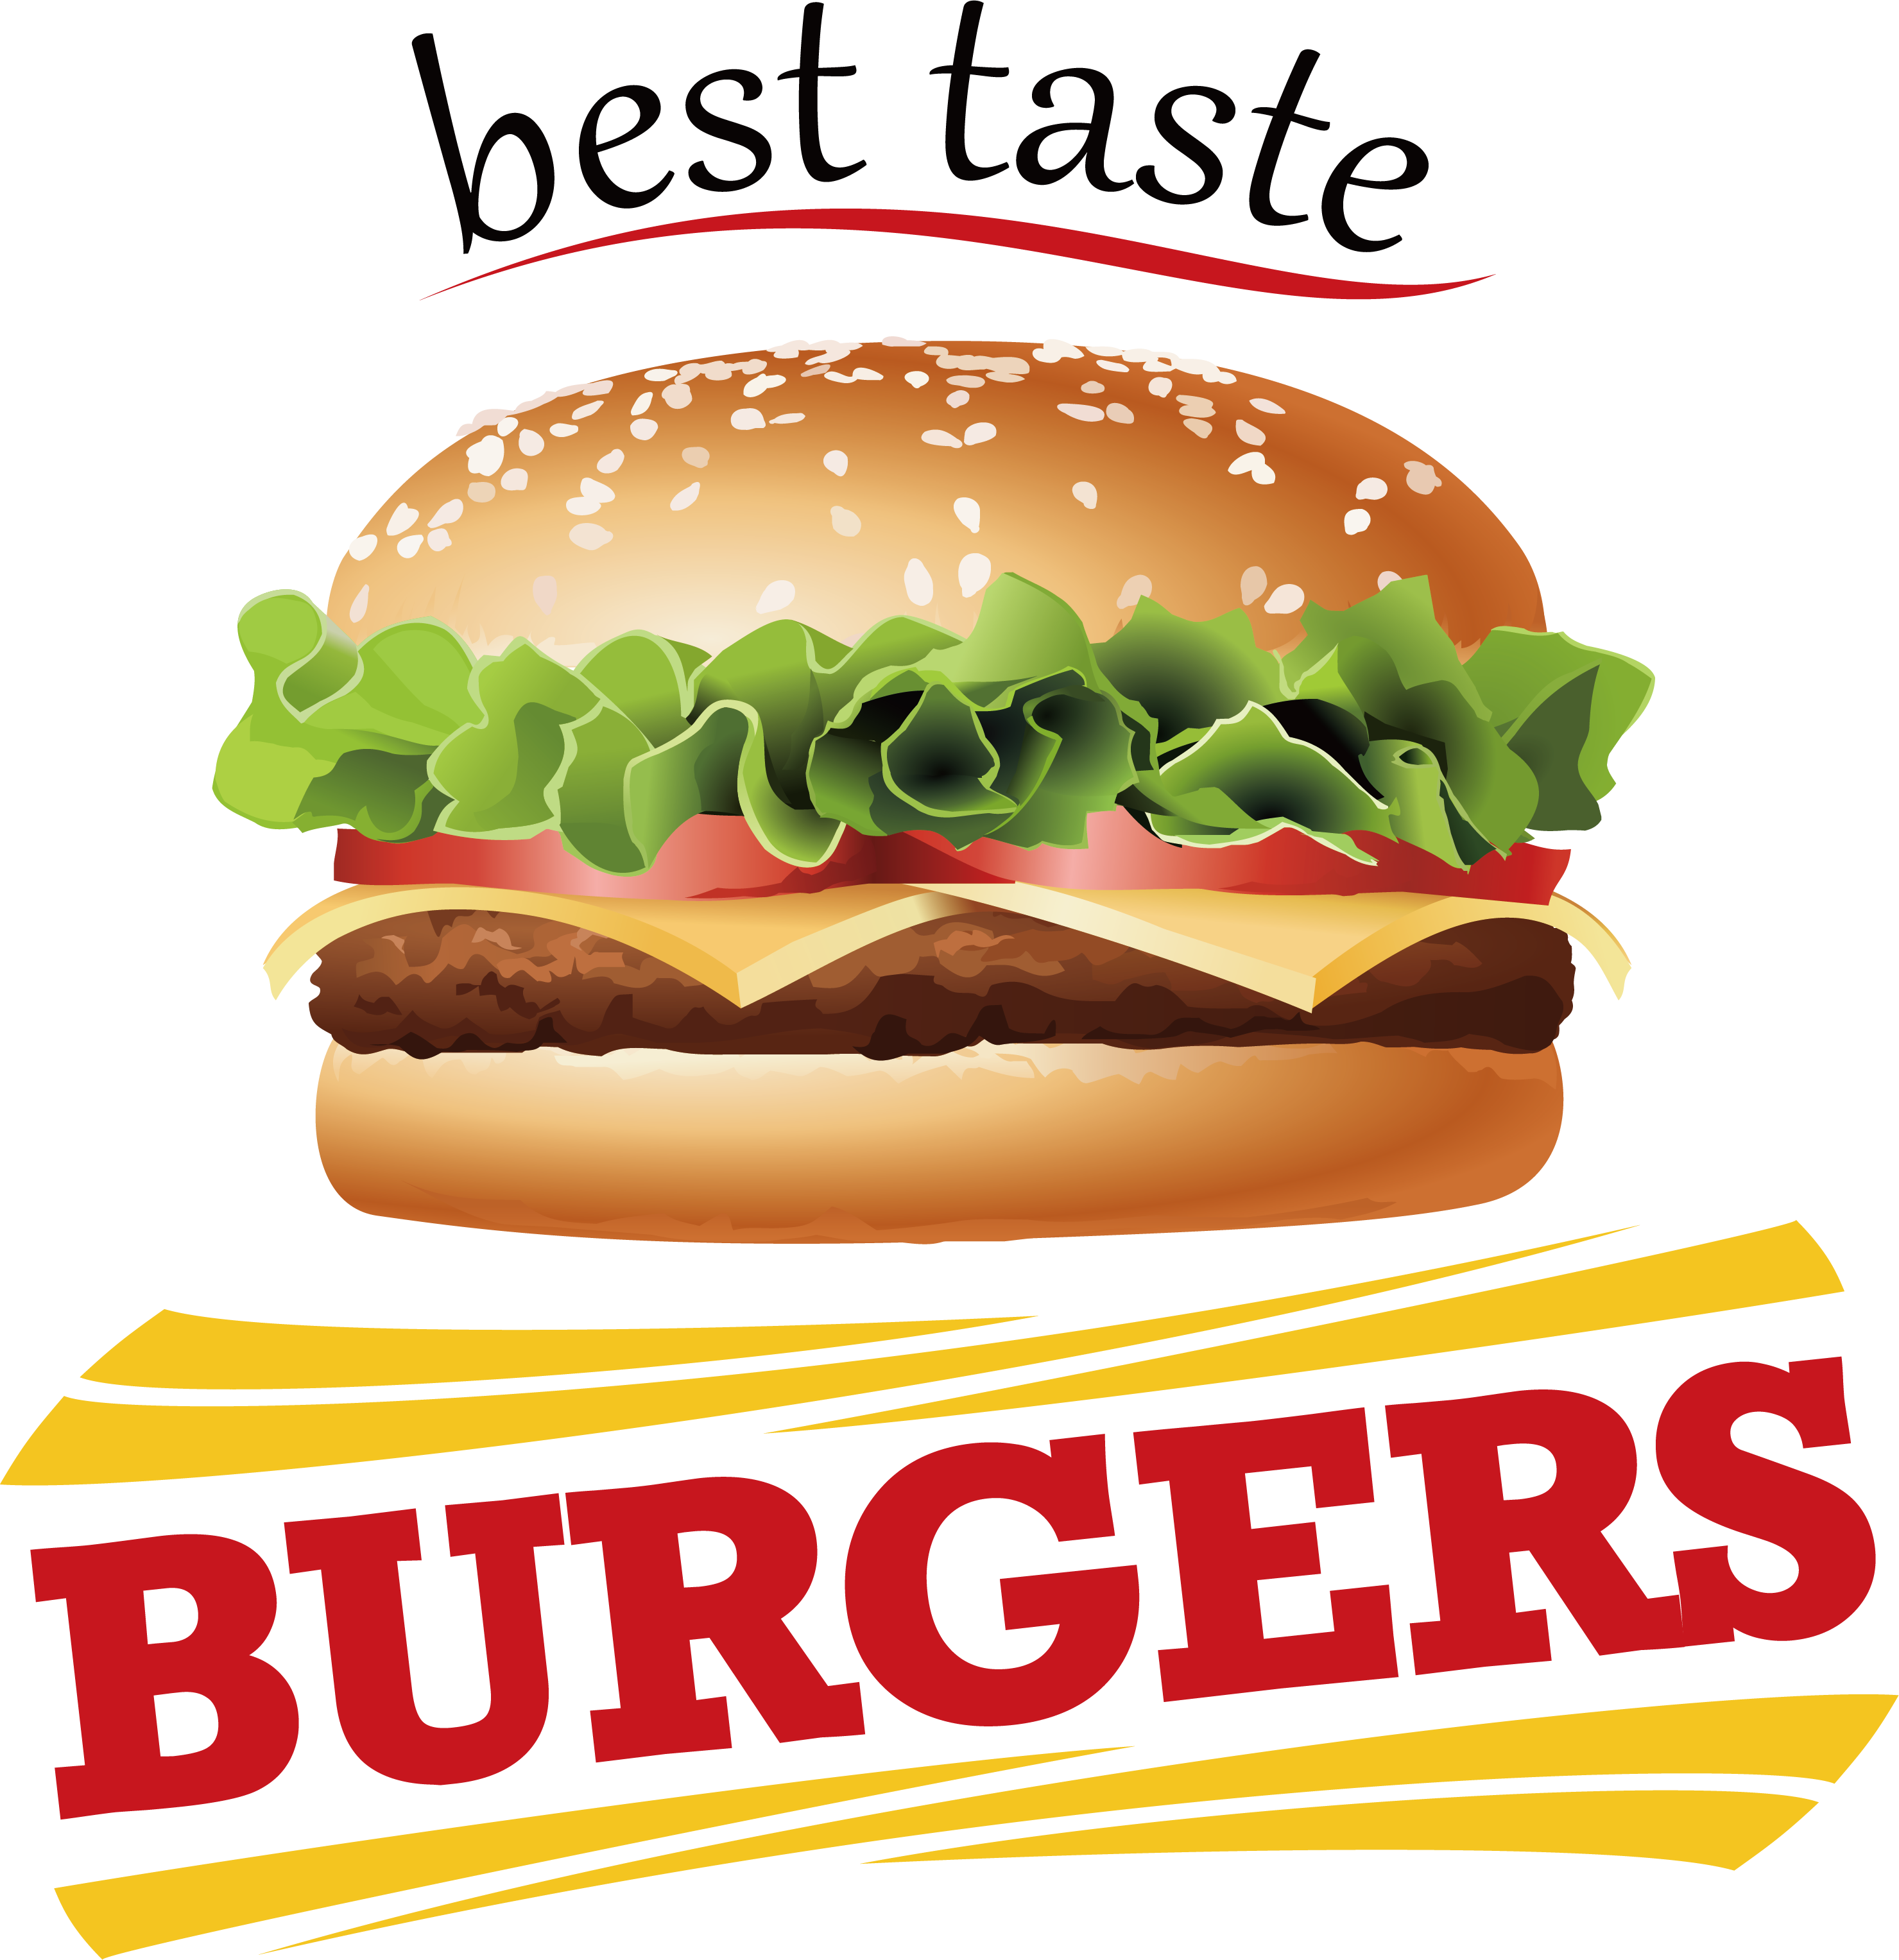 Слово фаст фуд. Эмблема бургер. Бургеры надпись. Логотип фастфуда. Надпись гамбургер.